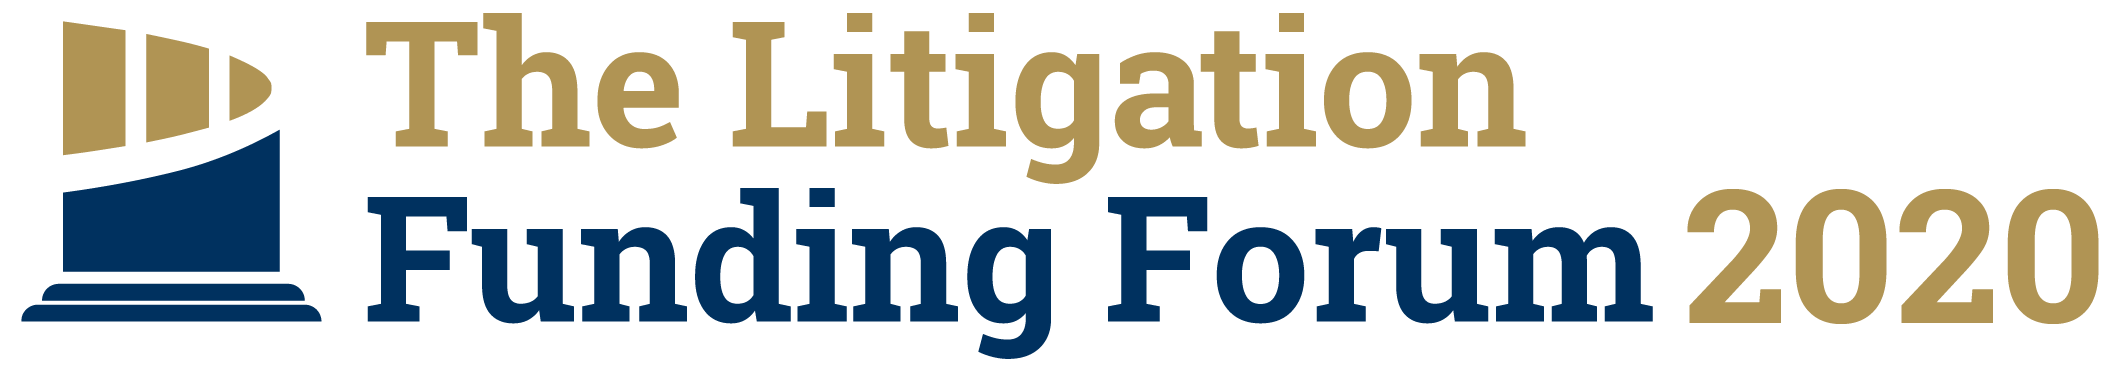 The Litigation Funding Forum 2020